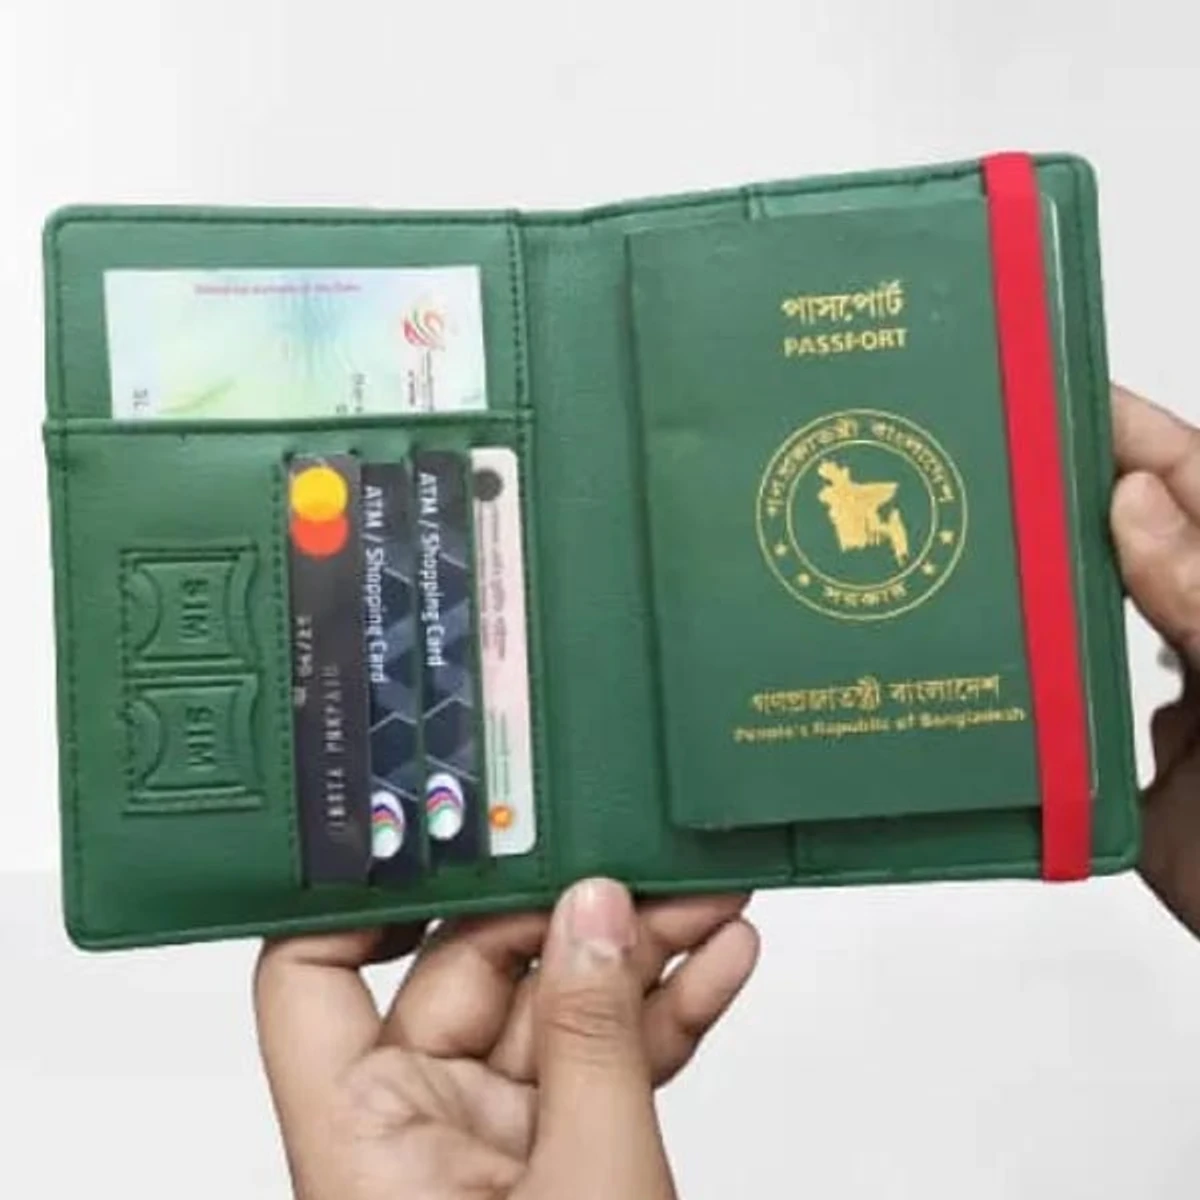 Passport and Card Holder Bangladeshi Passport and Card Holder